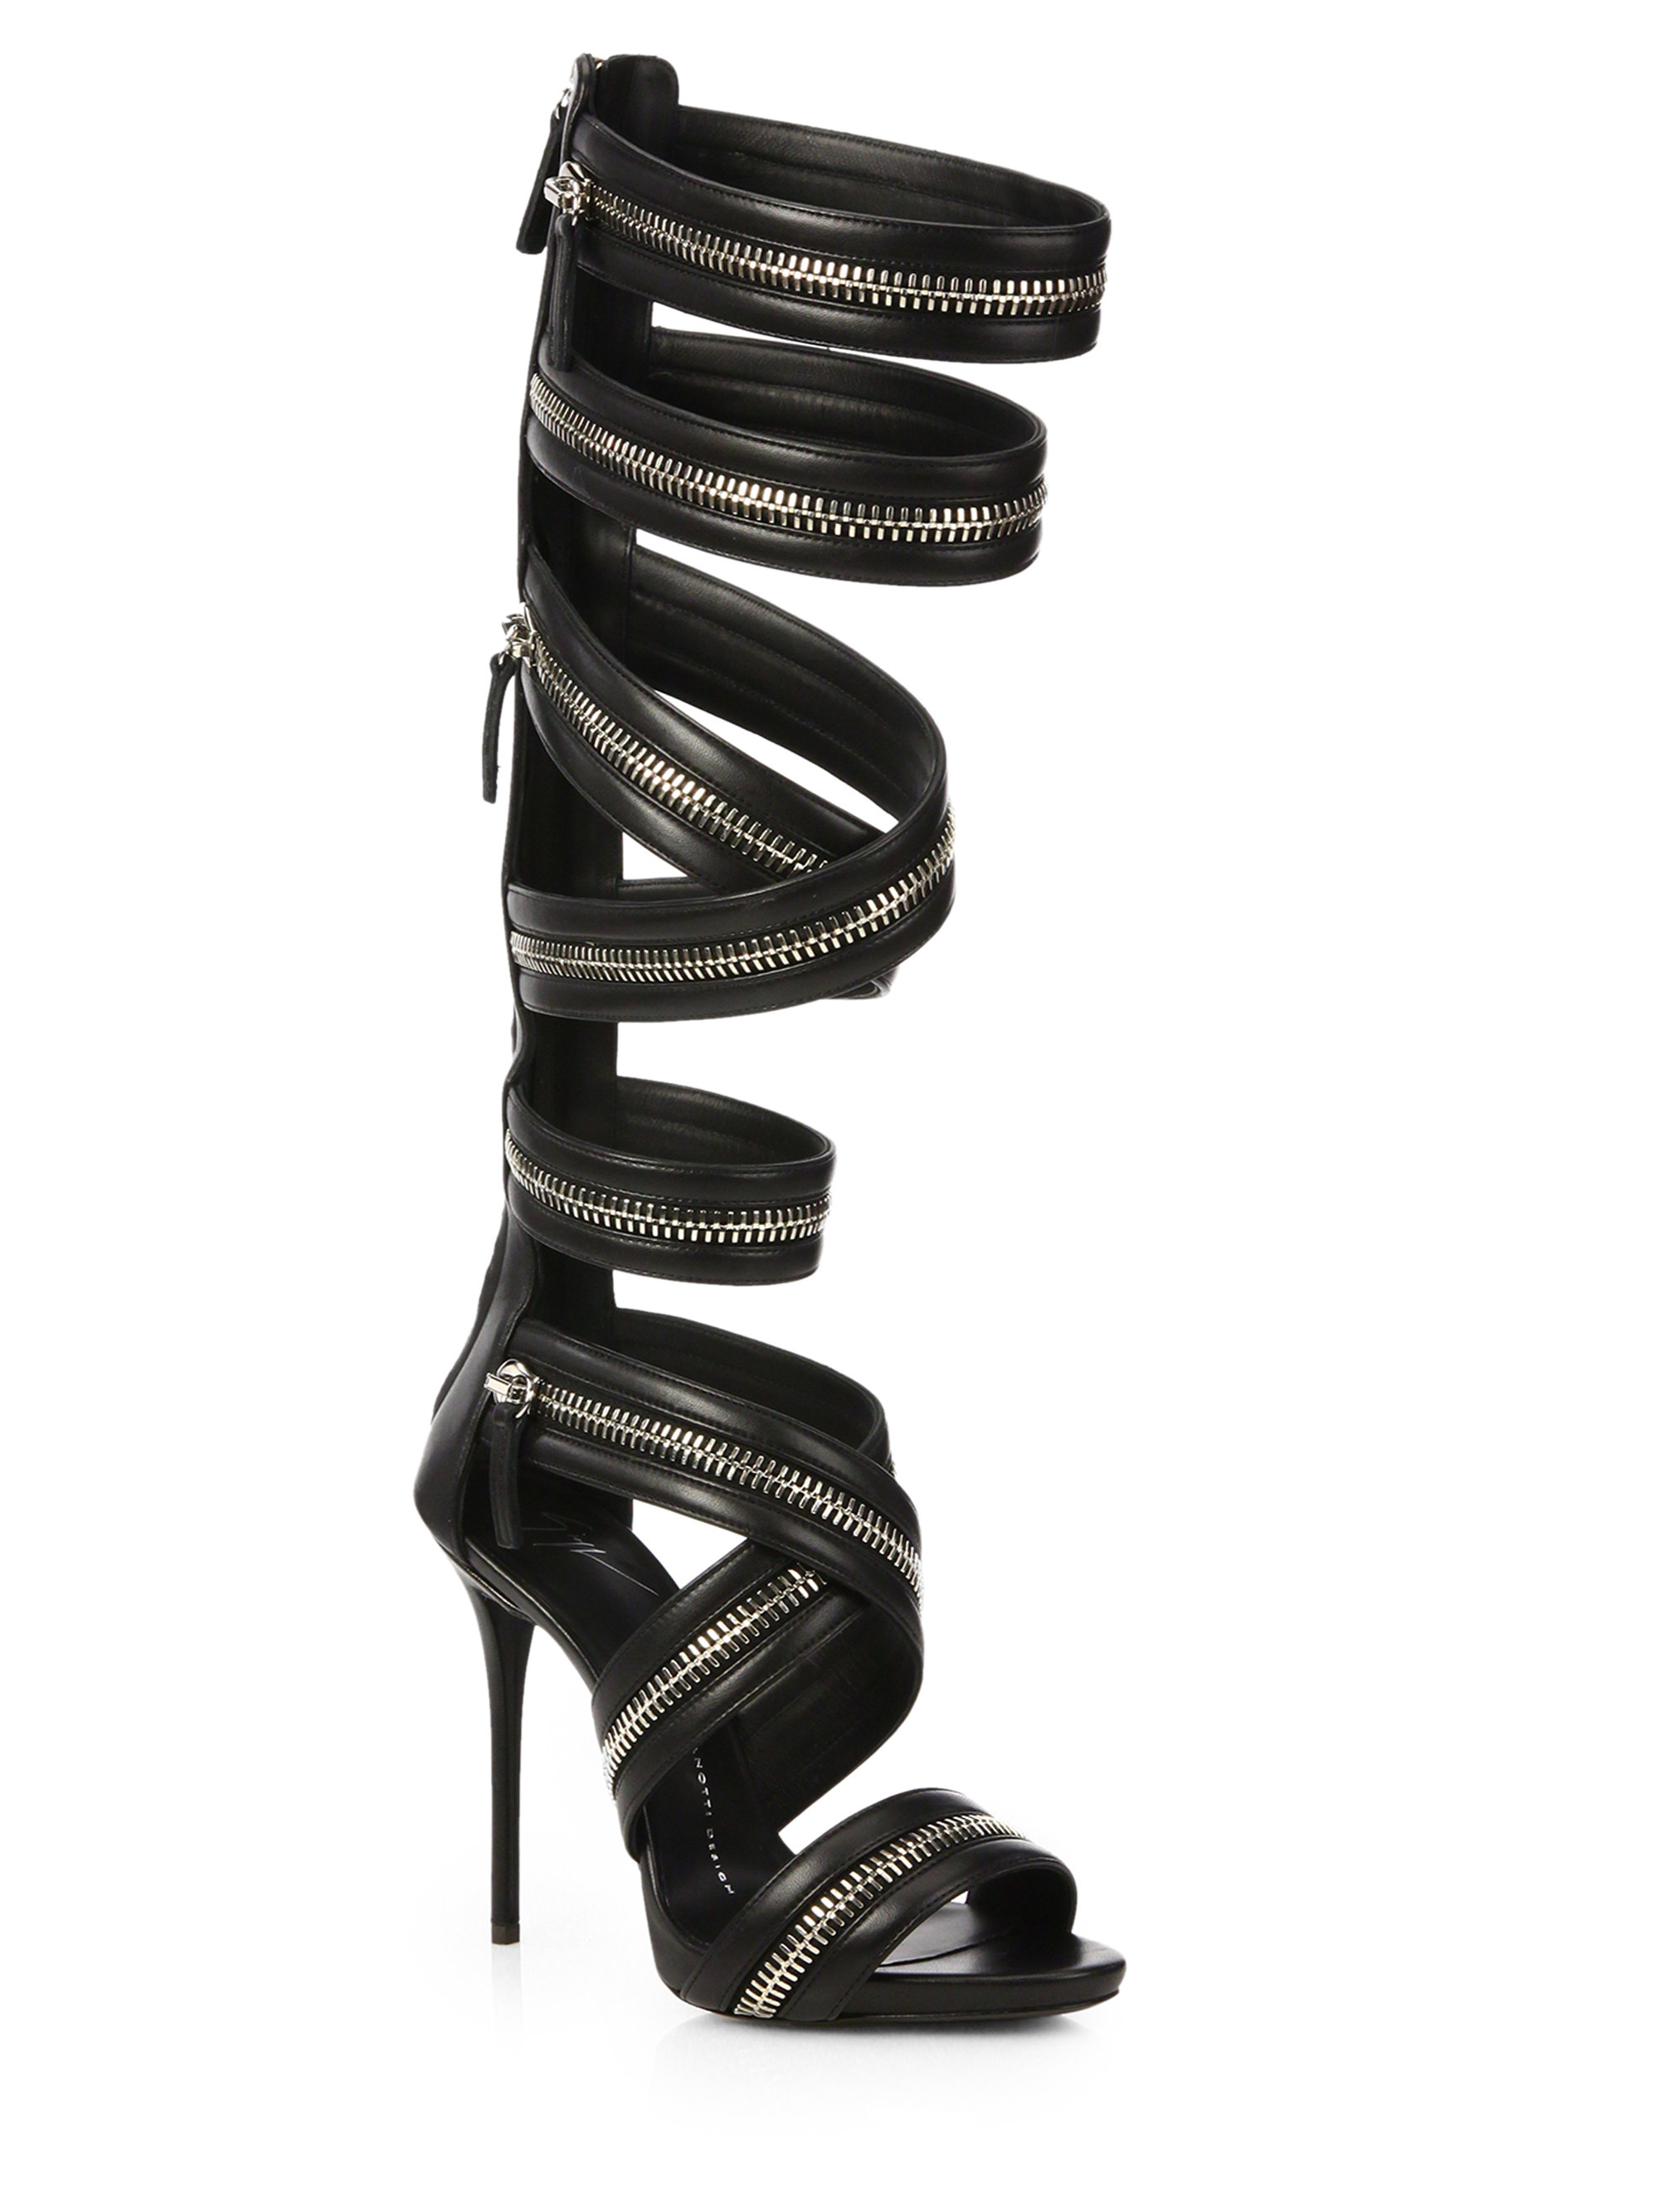 Giuseppe Zanotti Leather Zipper Gladiator Sandals in Nero-Black (Black) - Lyst